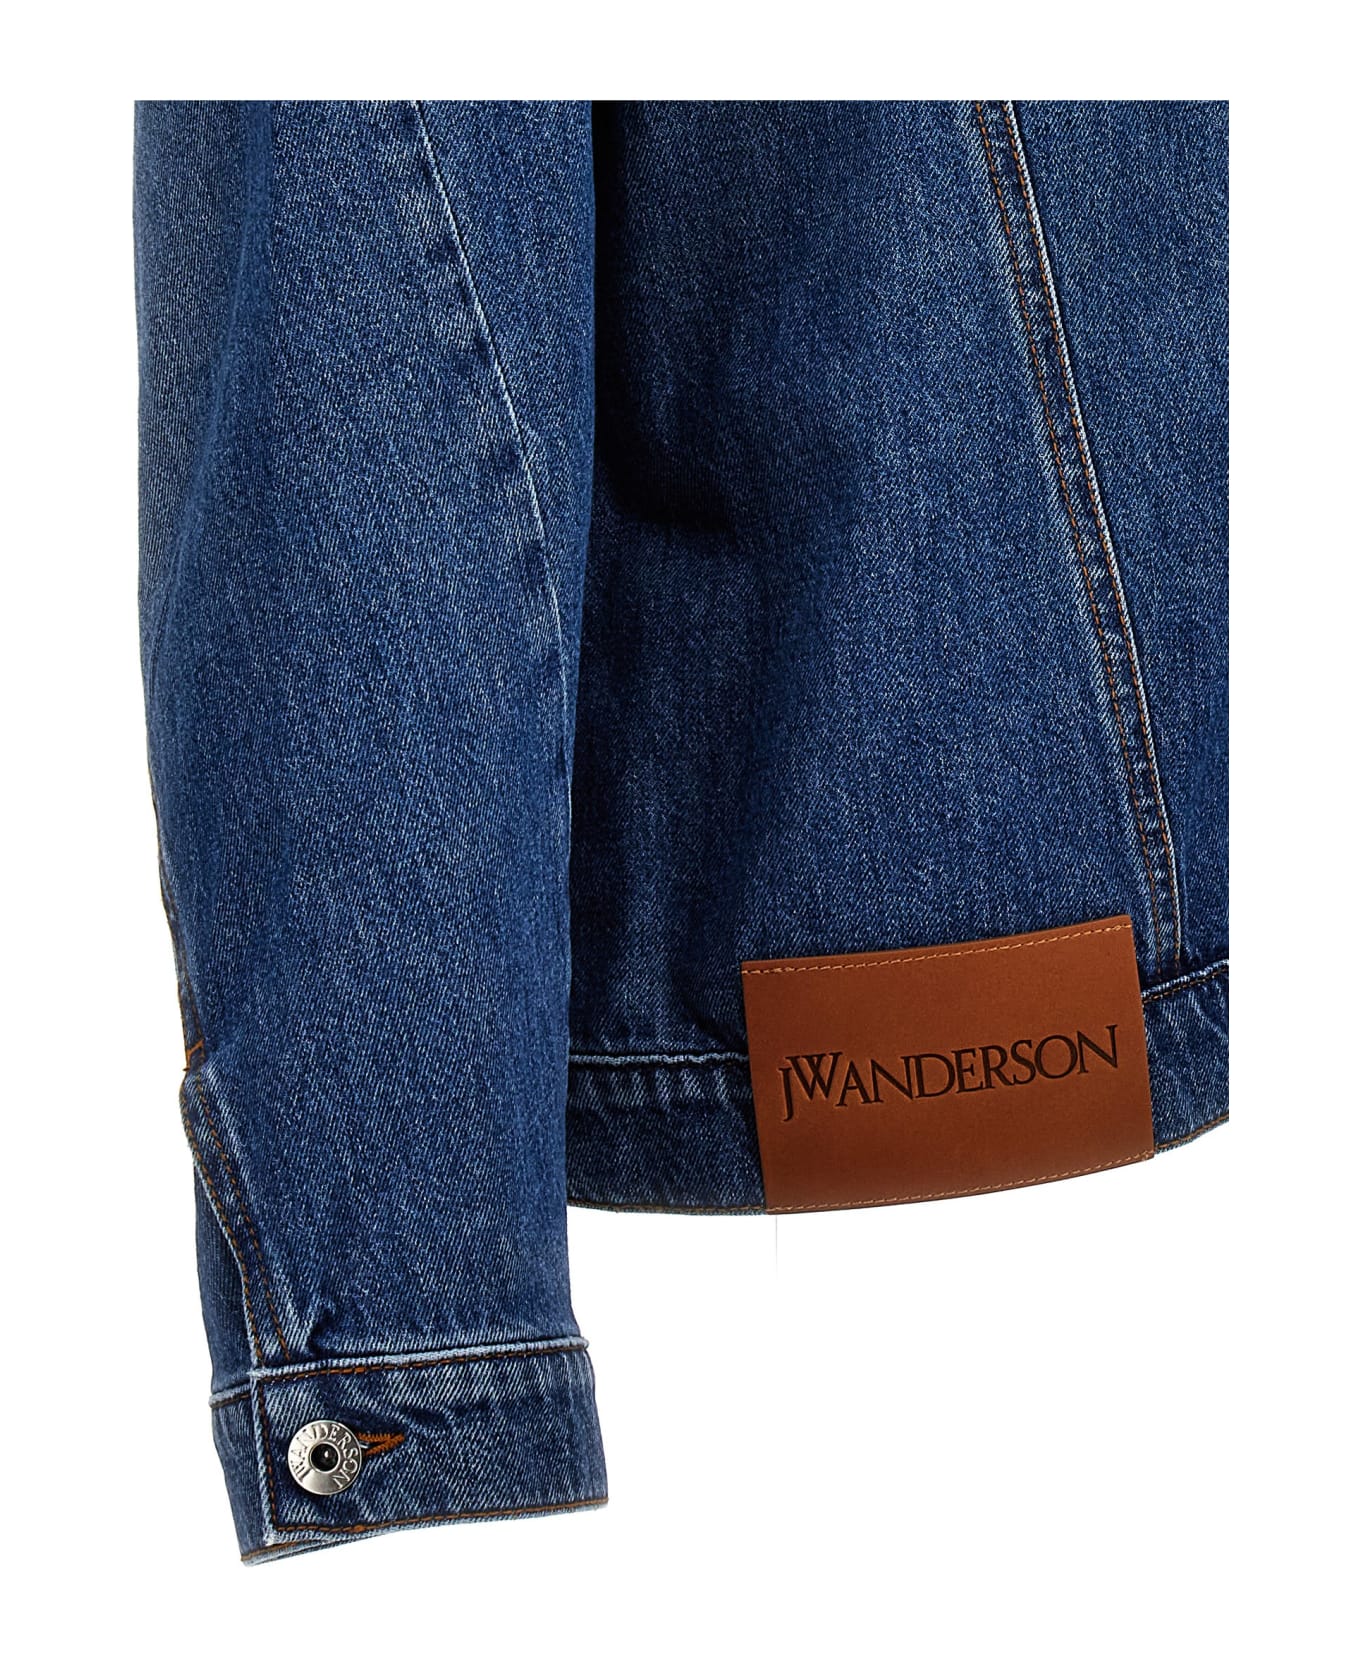 J.W. Anderson 'twisted Workwear' Denim Jacket - Blue